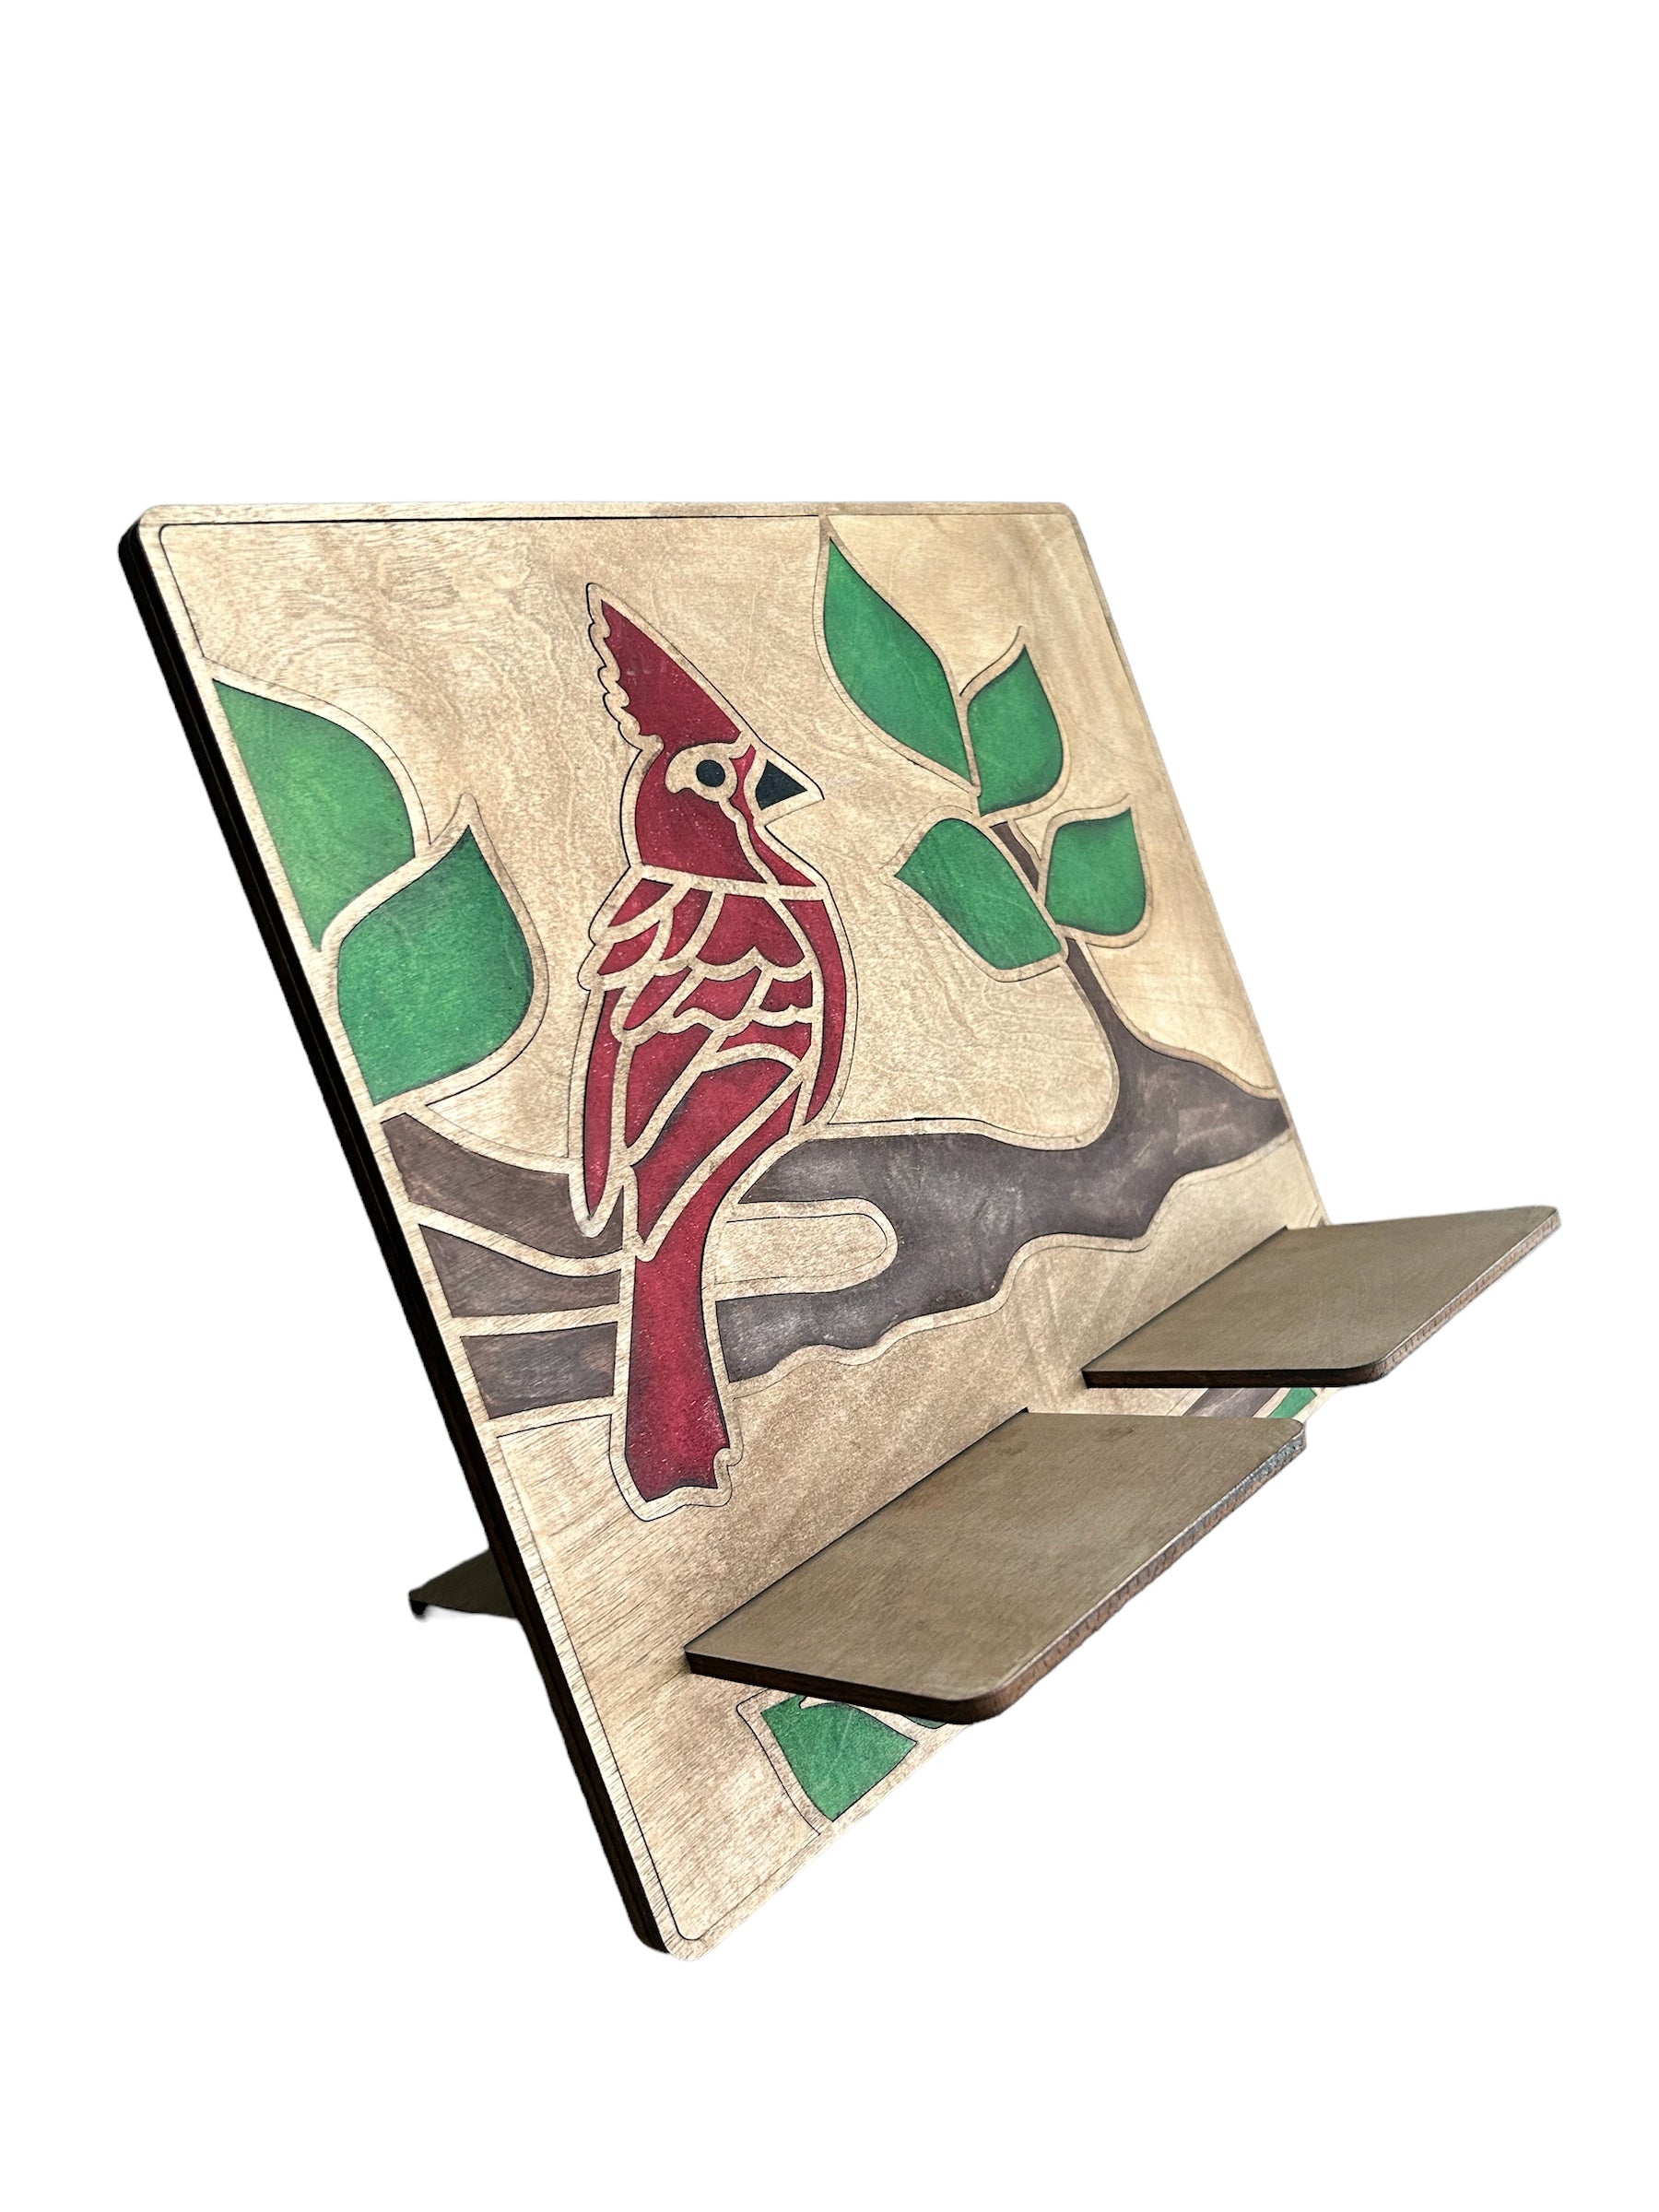 Wood cardinal iPad/cookbook stand